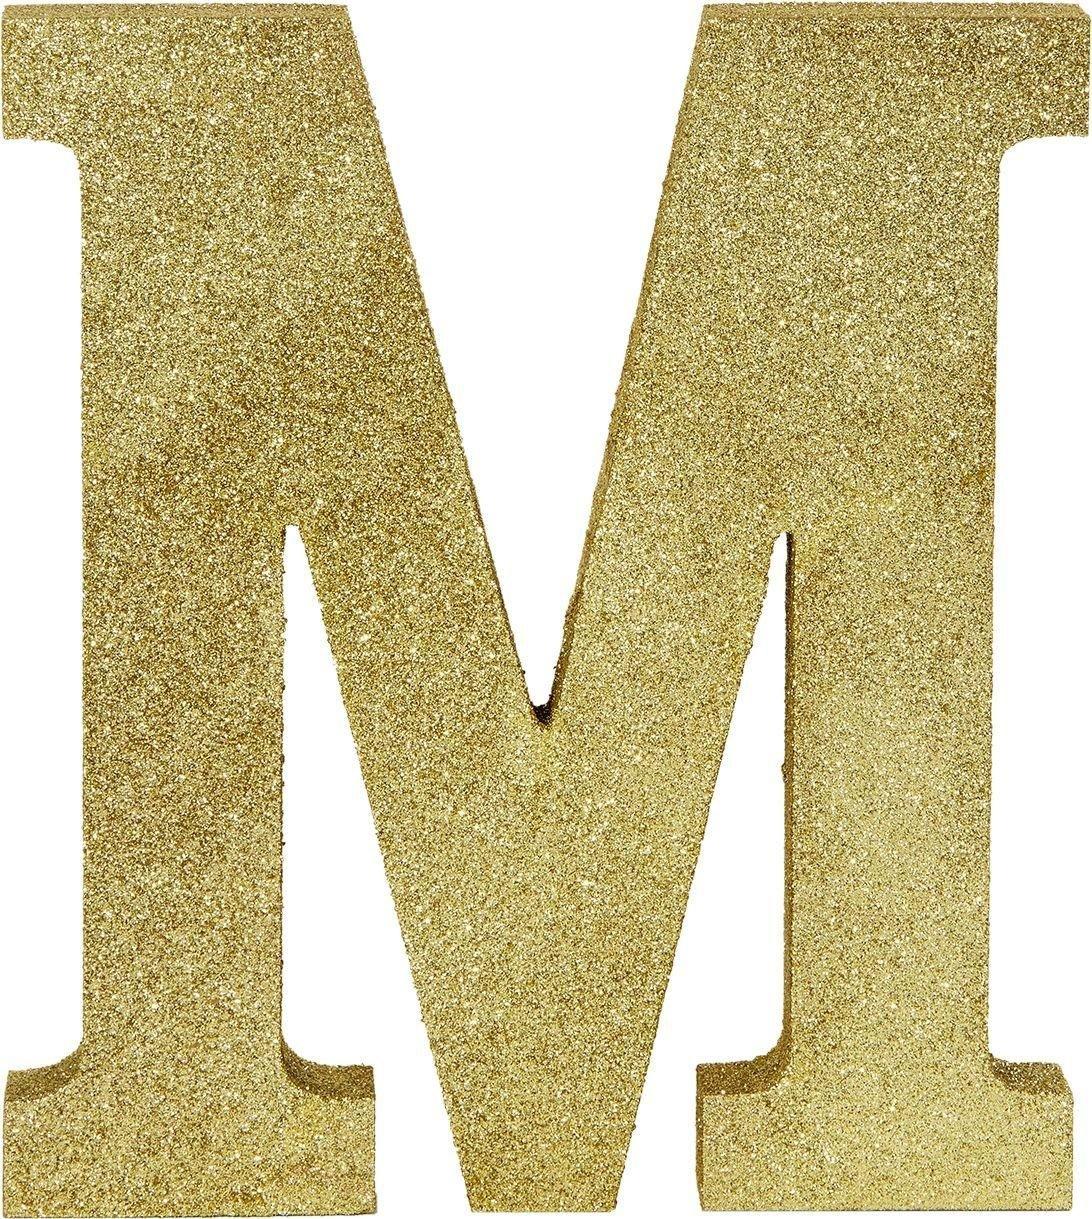 Glitter Gold Mrs. & Mrs. MDF Table Sign Kit, 7pc